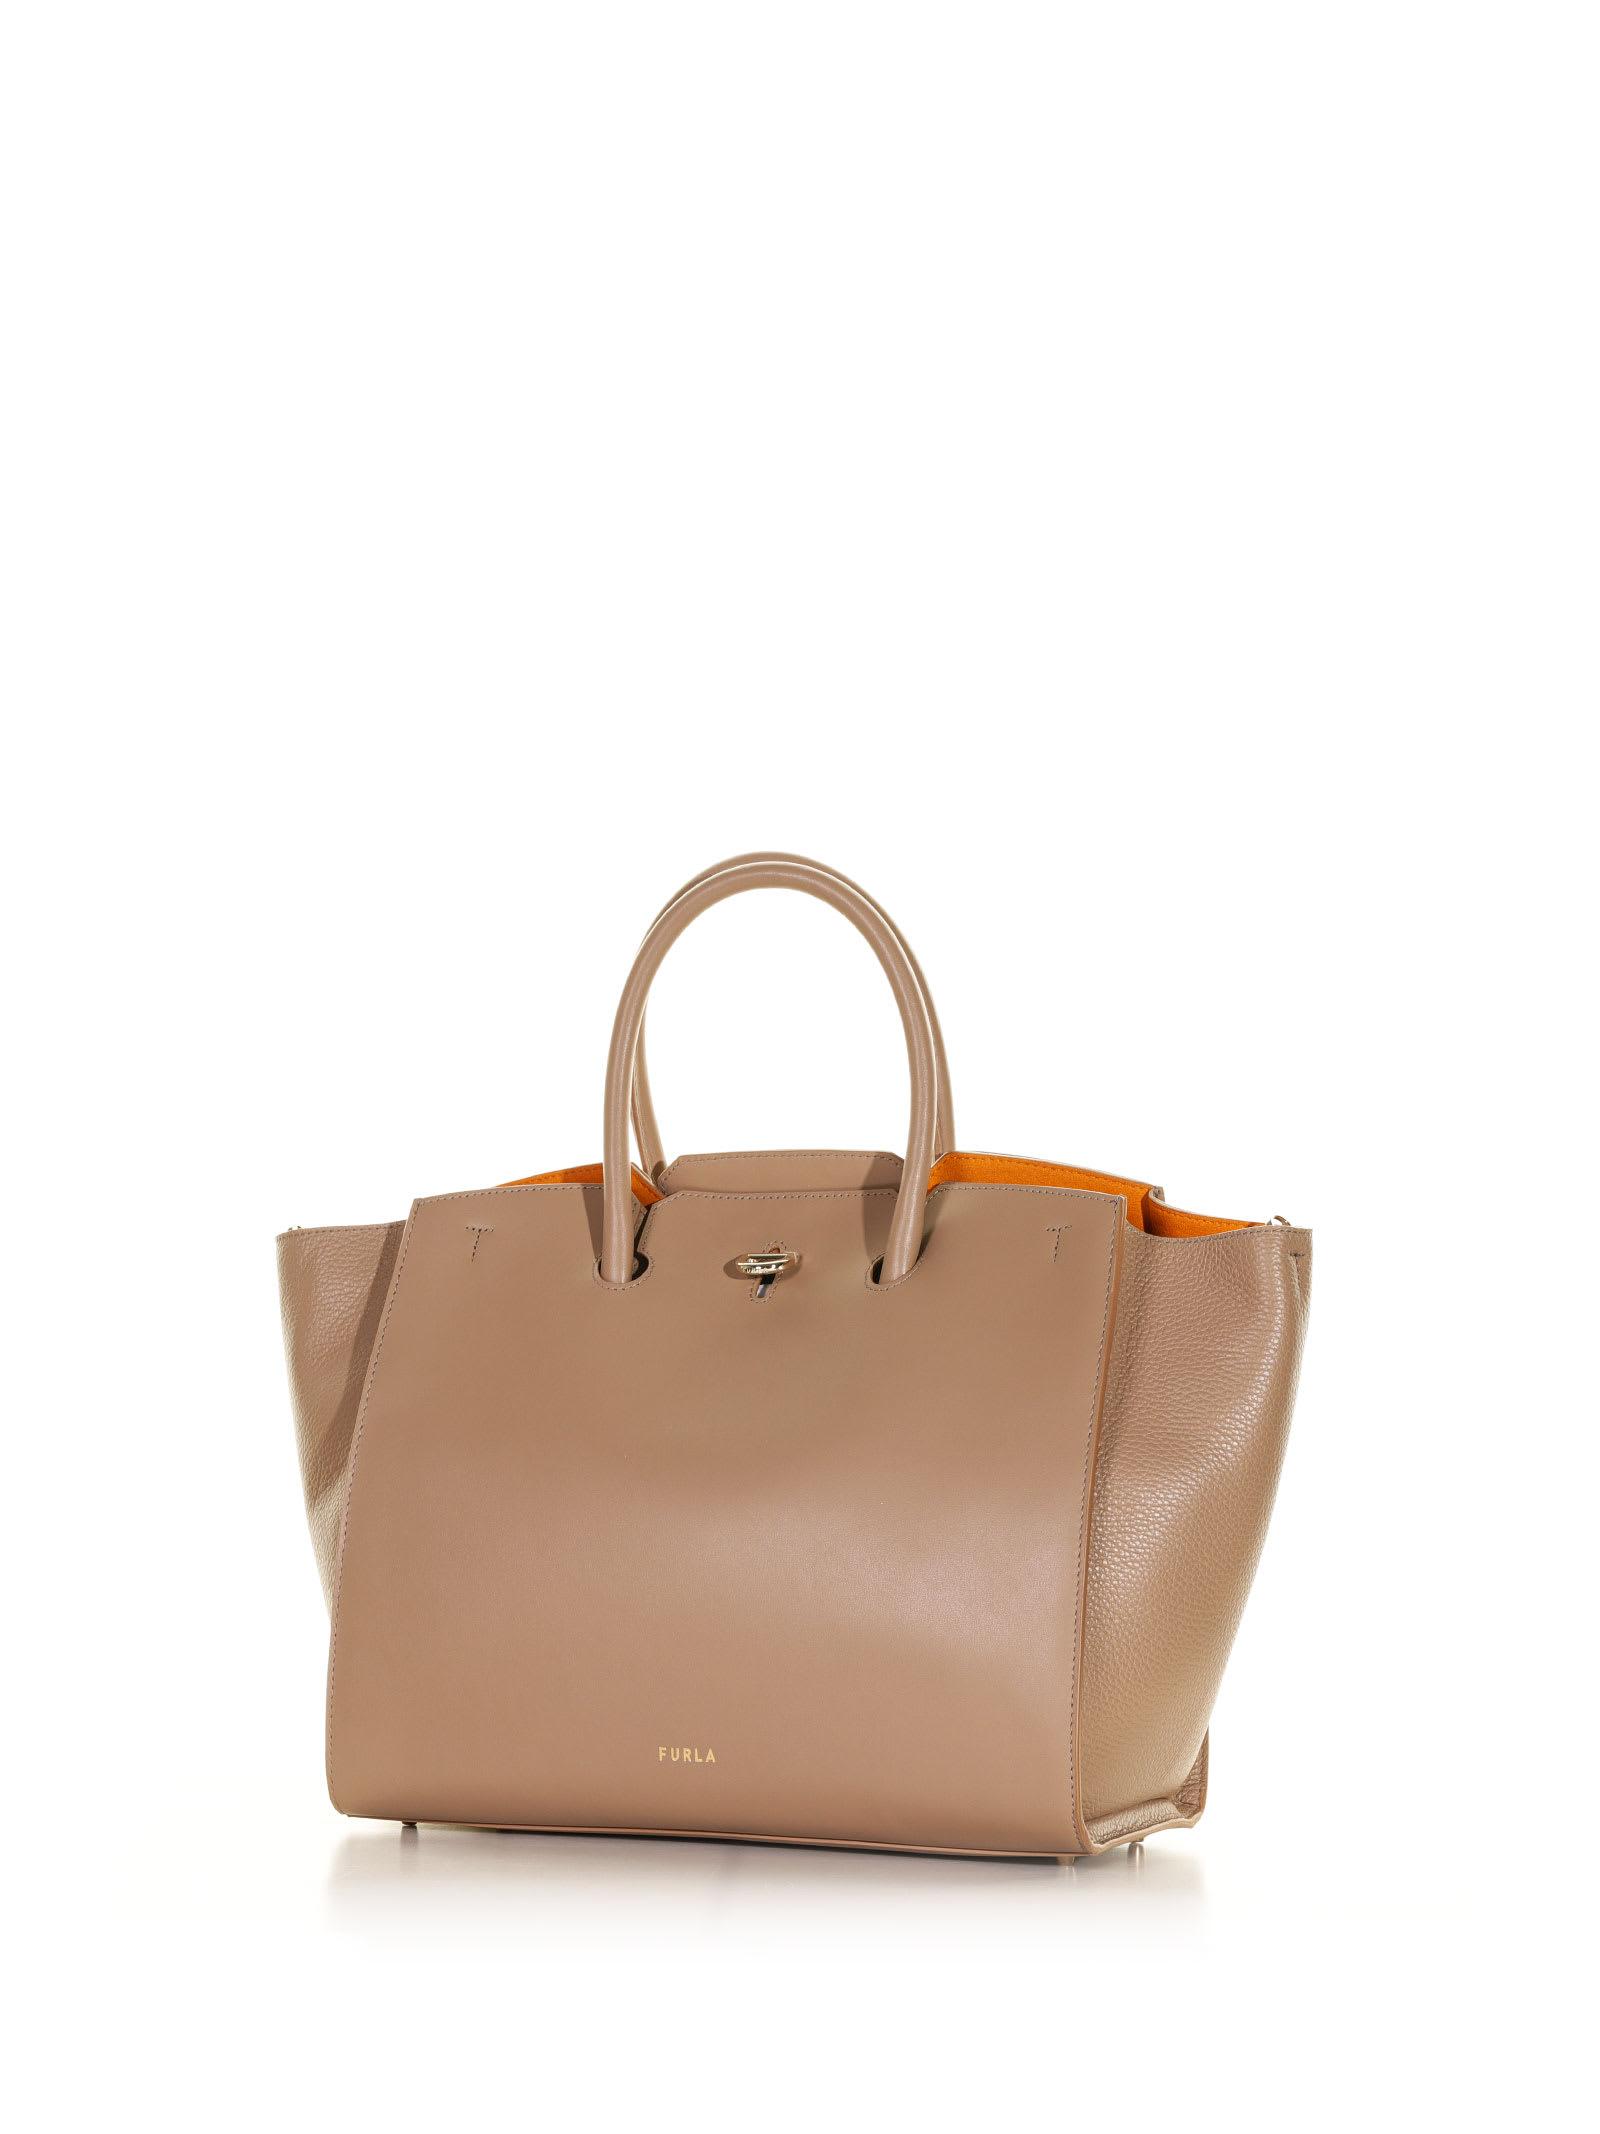 Furla Genesi L Leather Shopping Bag in Natural